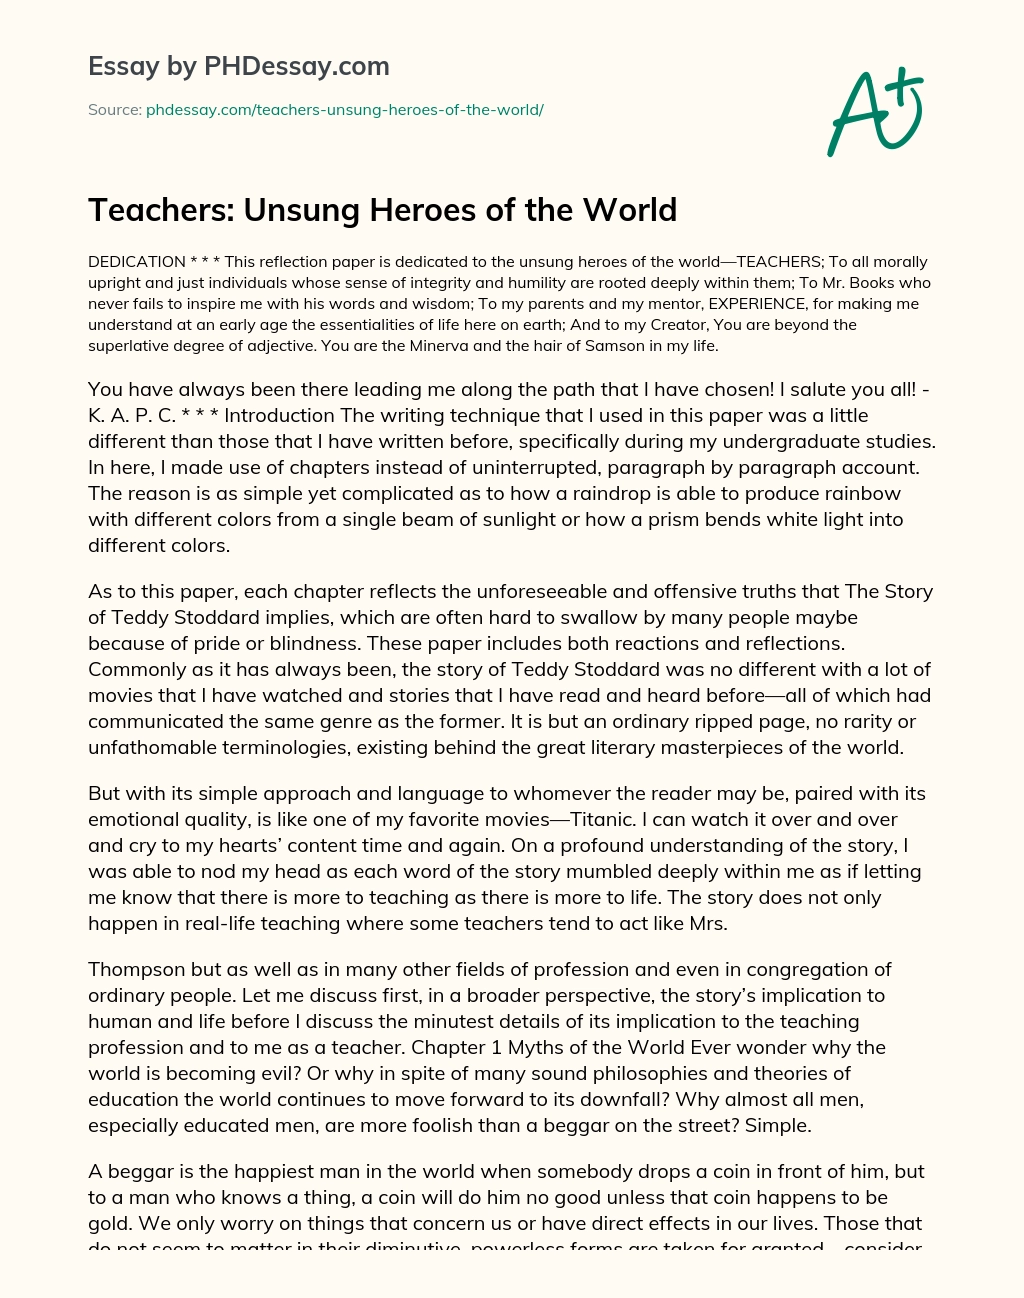 Teachers: Unsung Heroes of the World essay